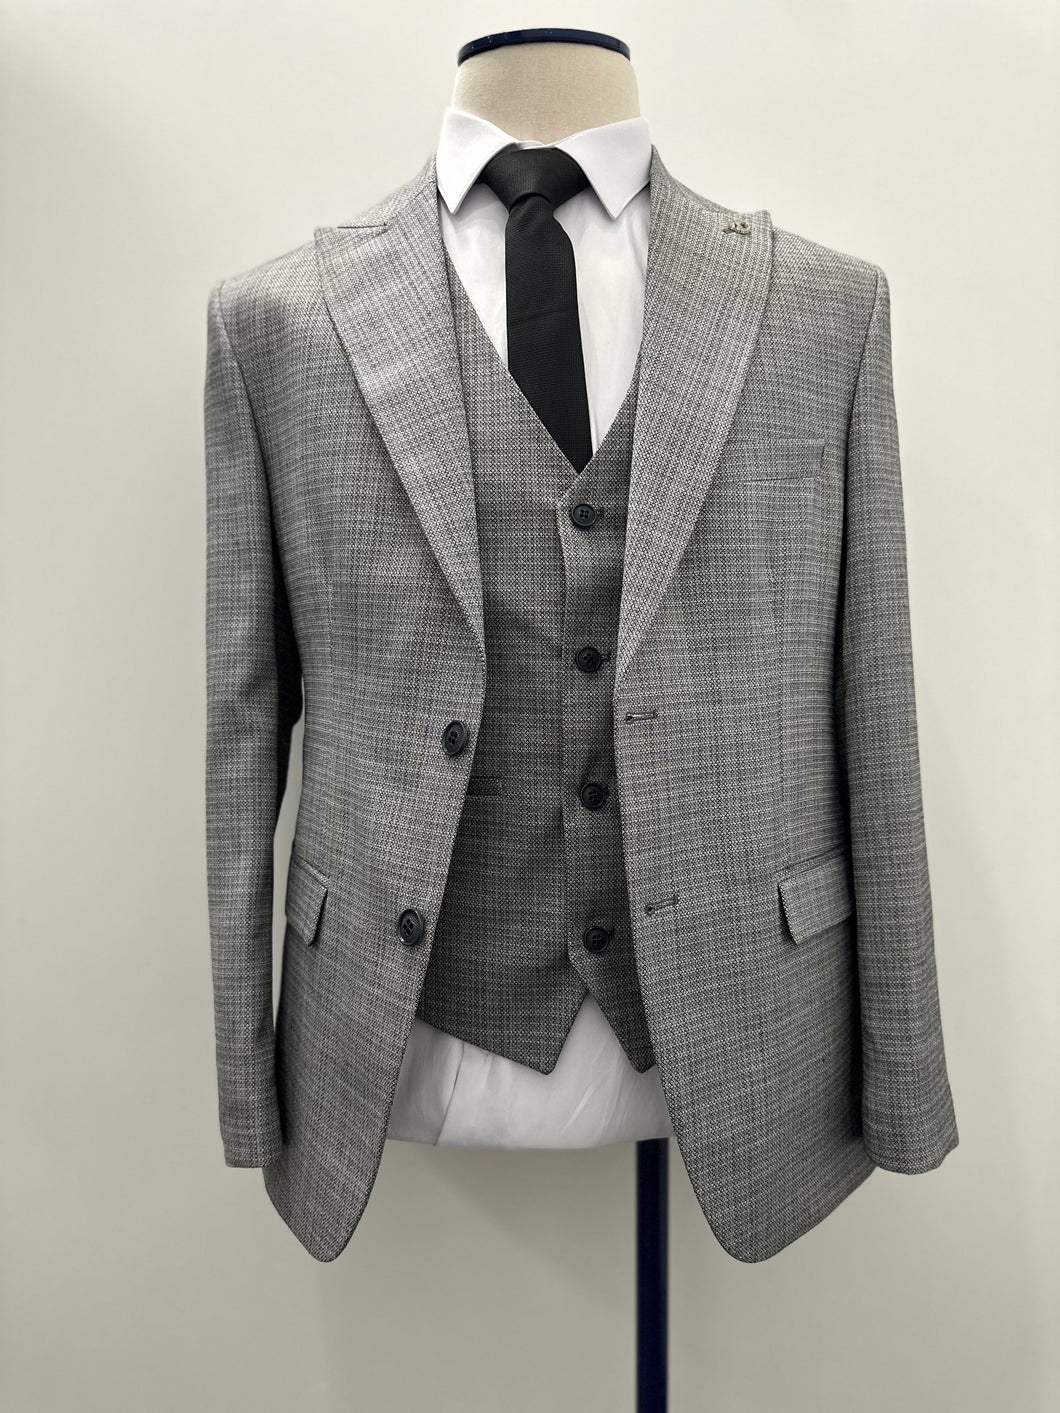 Dove Grey Suit